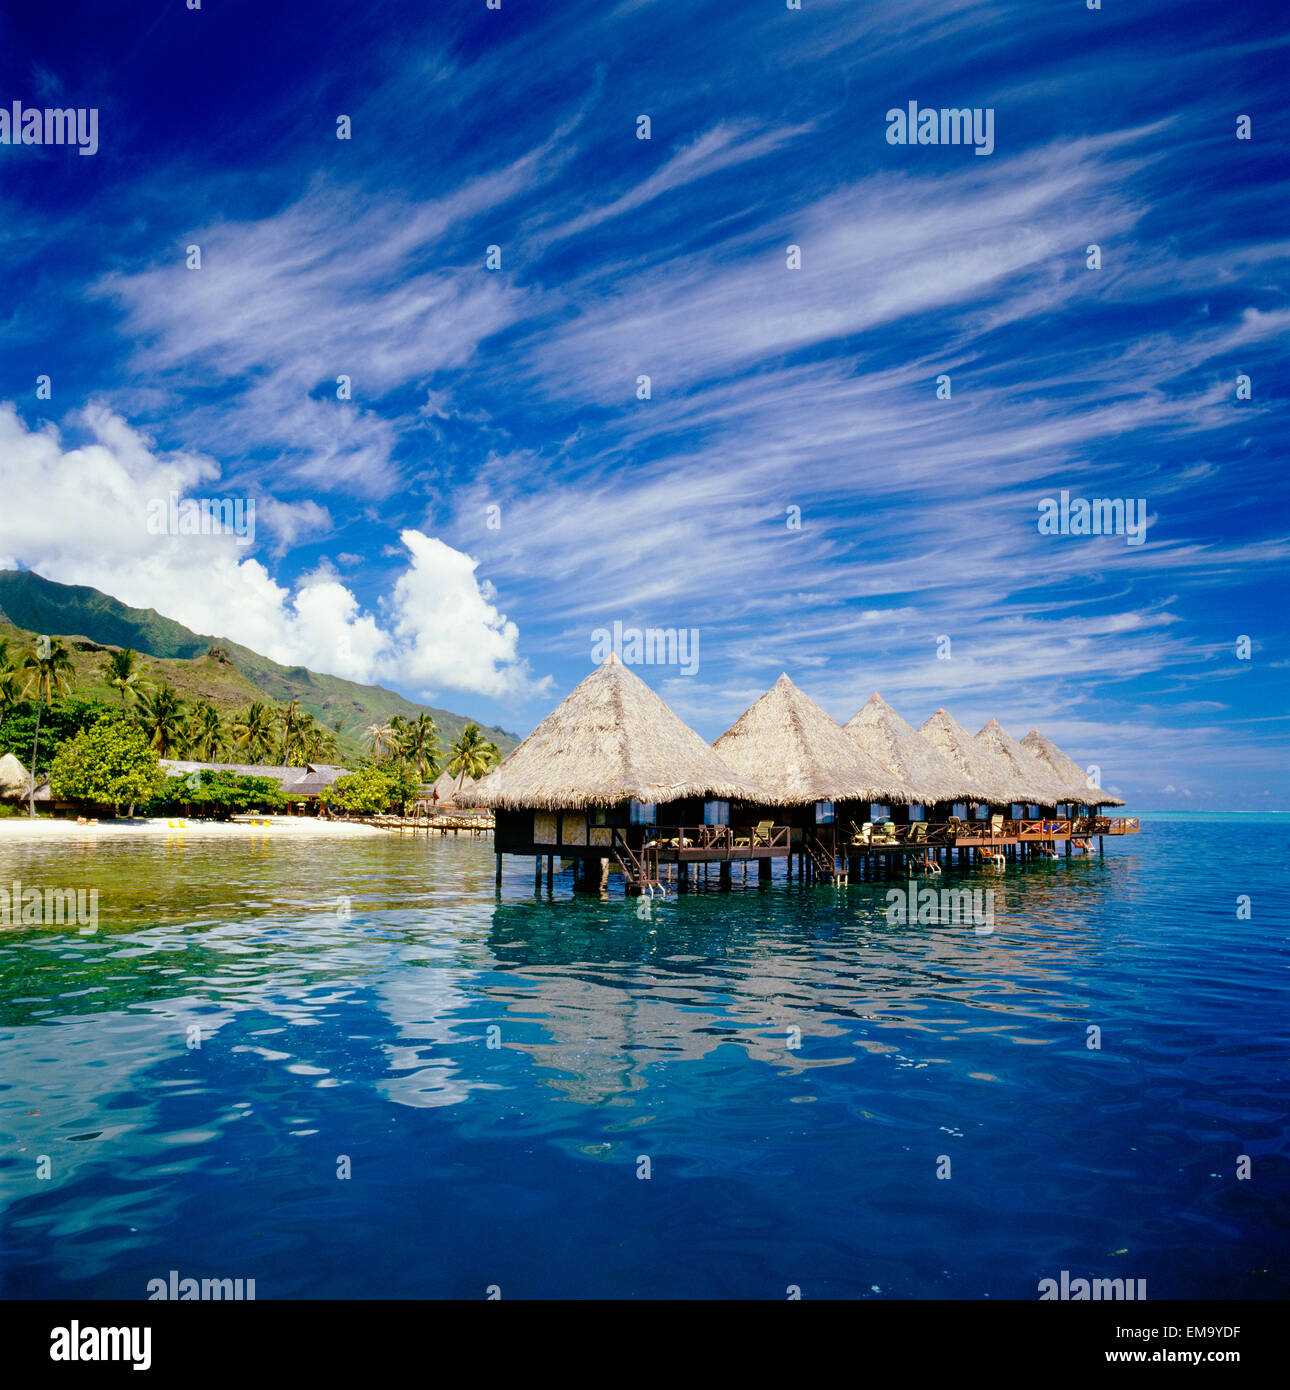 French Polynesia, Tahiti, Moorea, Bali Hai Resort Huts Over Water, Wispy  Clouds In Blue Sky Stock Photo - Alamy